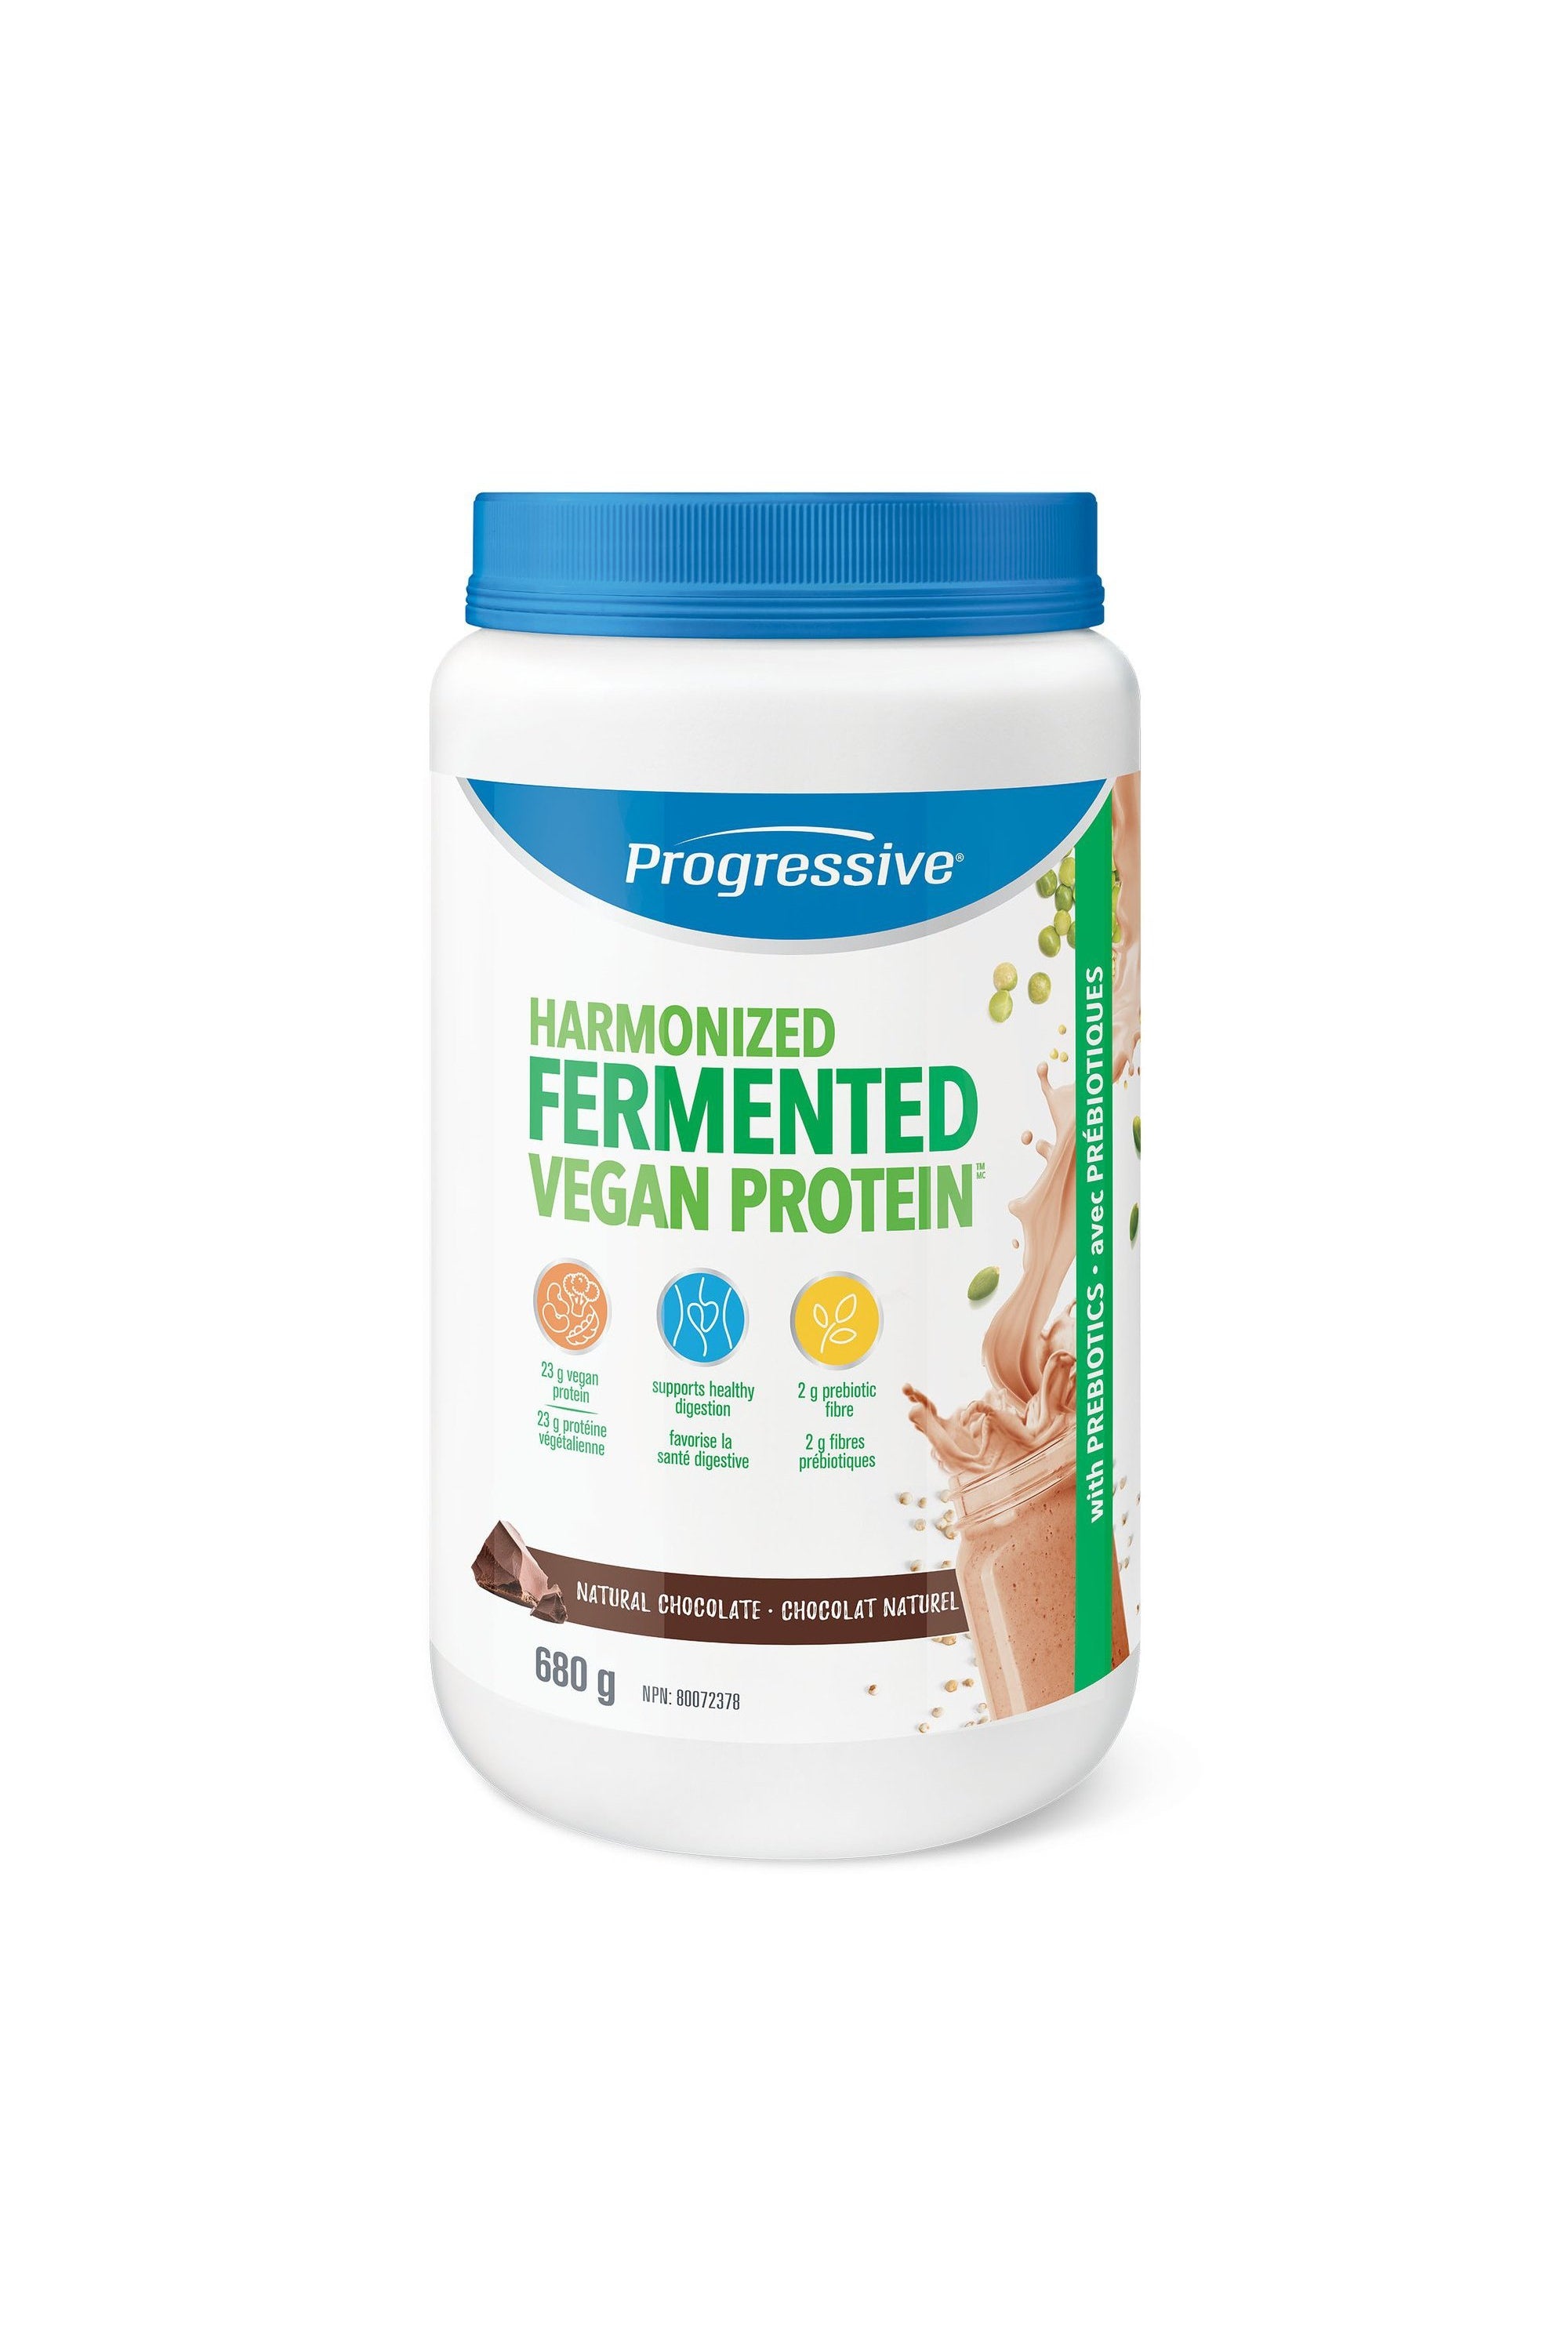 Progressive Harmonized Fermented Vegan Protein - Natural Chocolate Flavour 680g